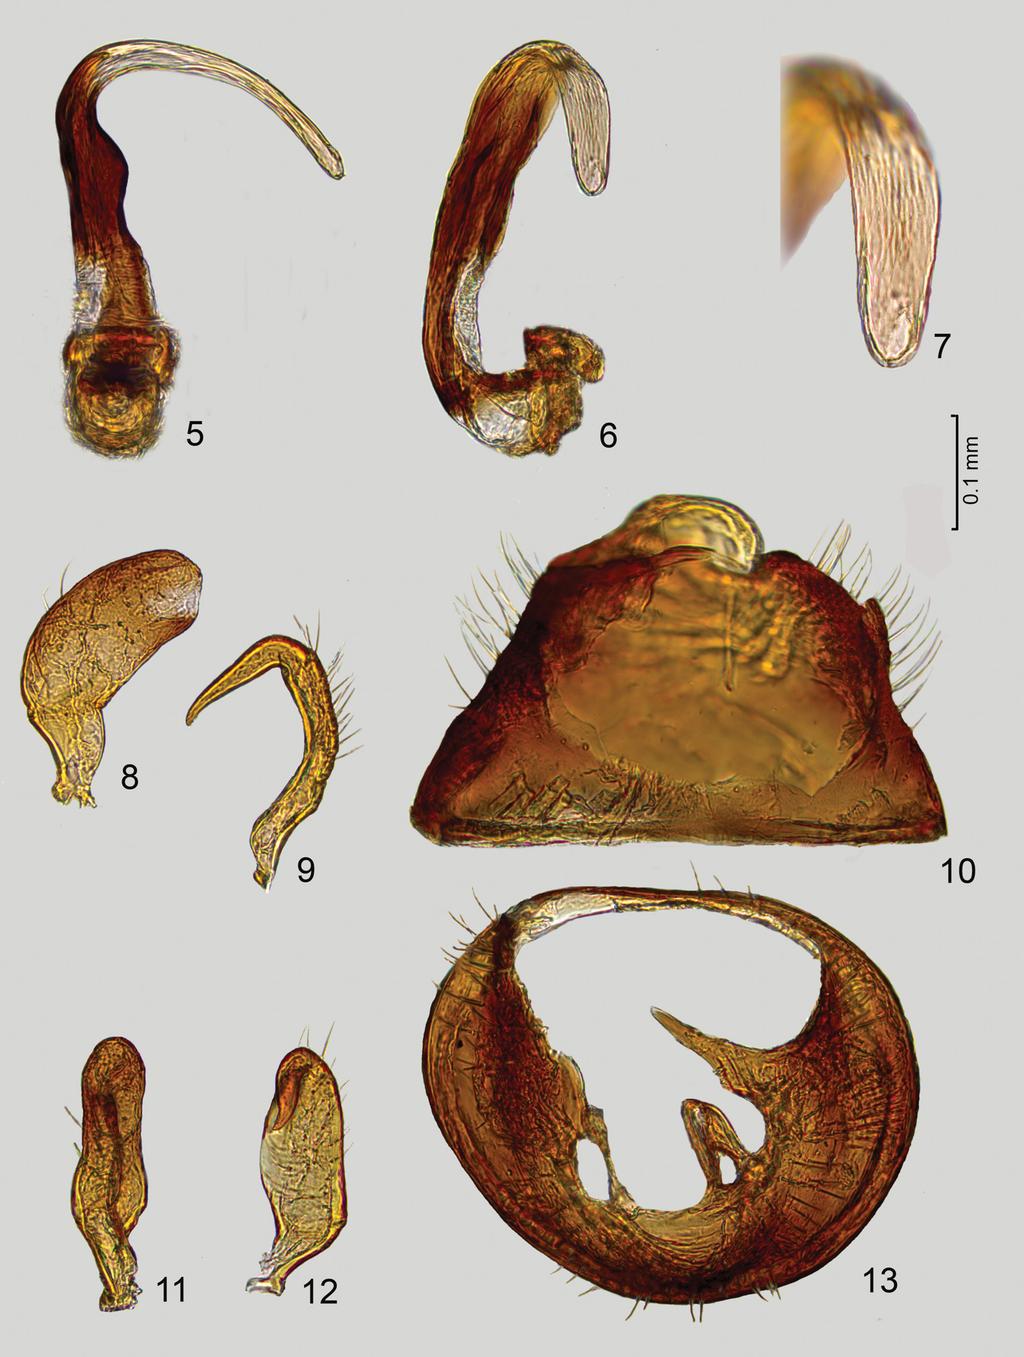 54 KONSTANTINOV & ZINOVJEVA: A new Ambunticoris from Sulawesi (Miridae) Figs 5 13. Ambunticoris sulawesicus sp. nov., male genitalia.